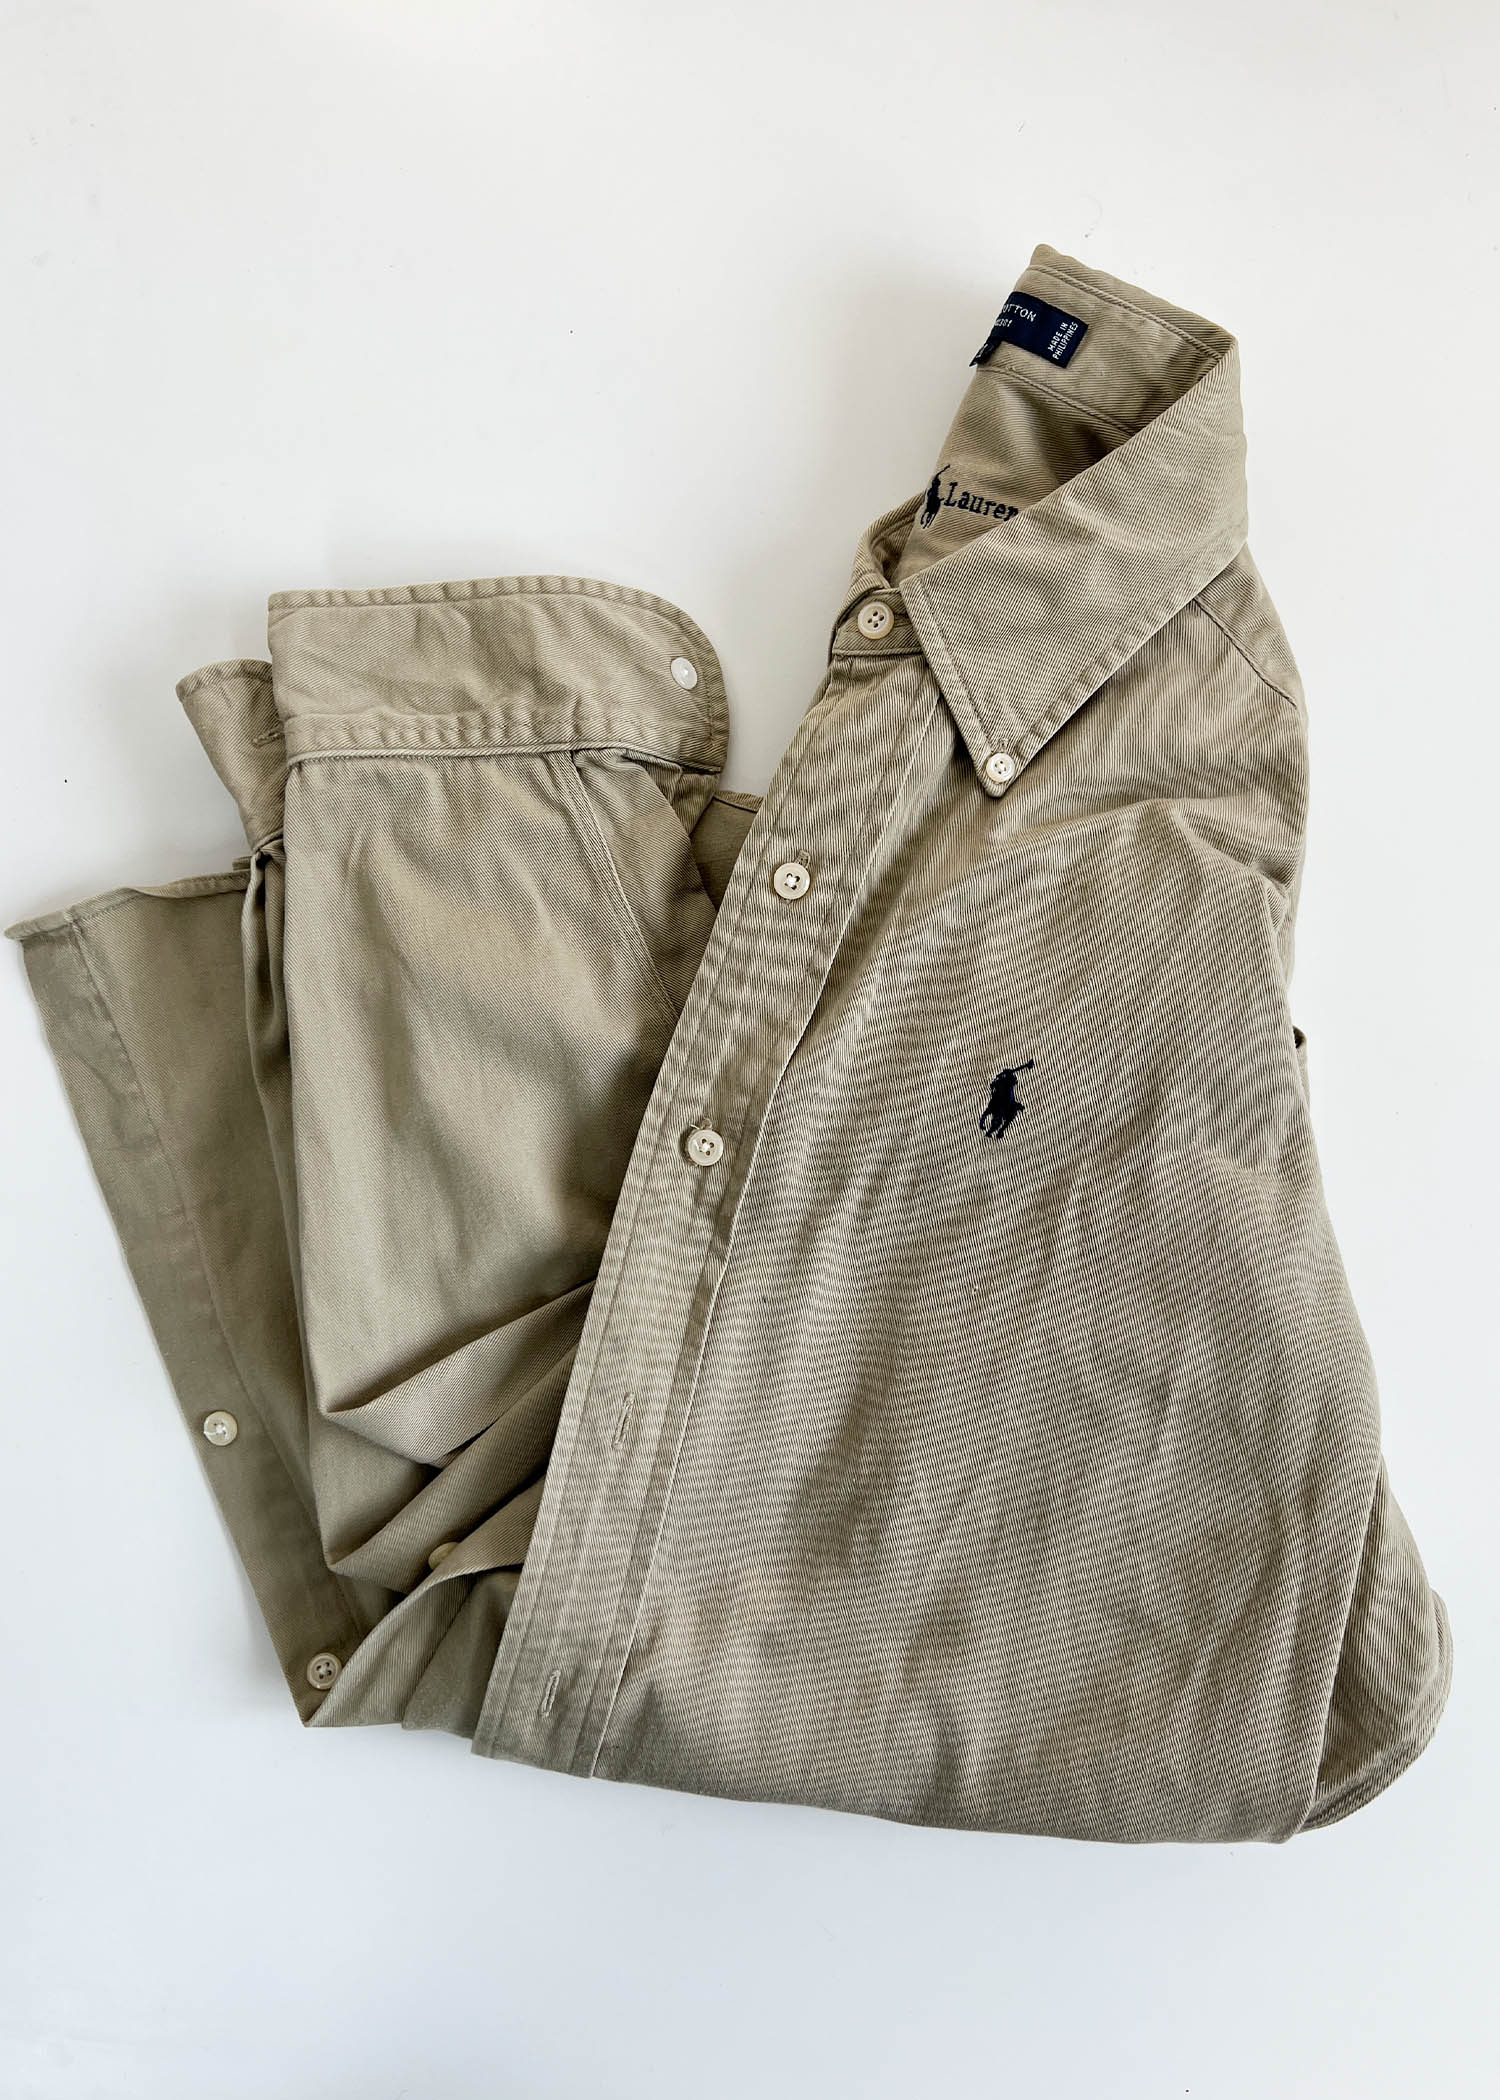 Polo by Ralph Lauren shirts